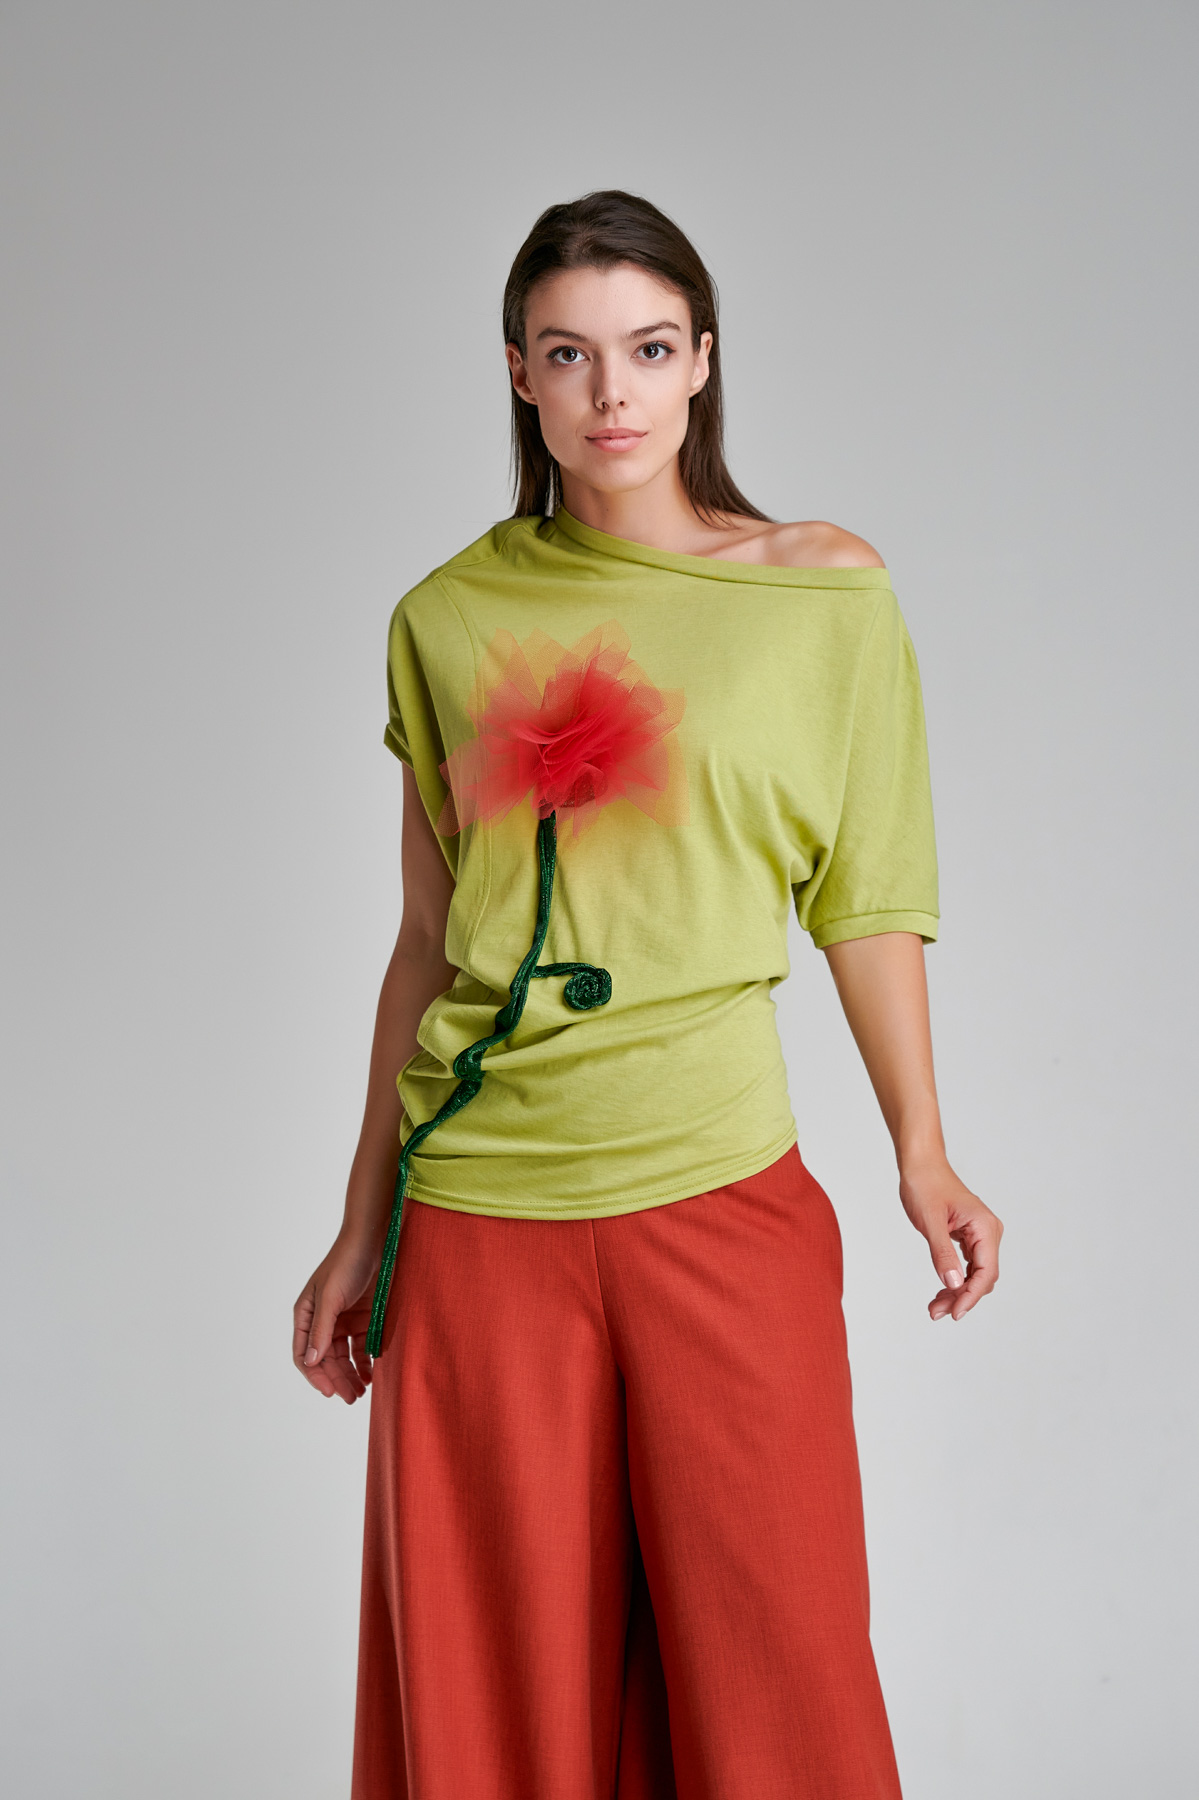 DUNA casual blouse with asymmetrical neckline. Natural fabrics, original design, handmade embroidery